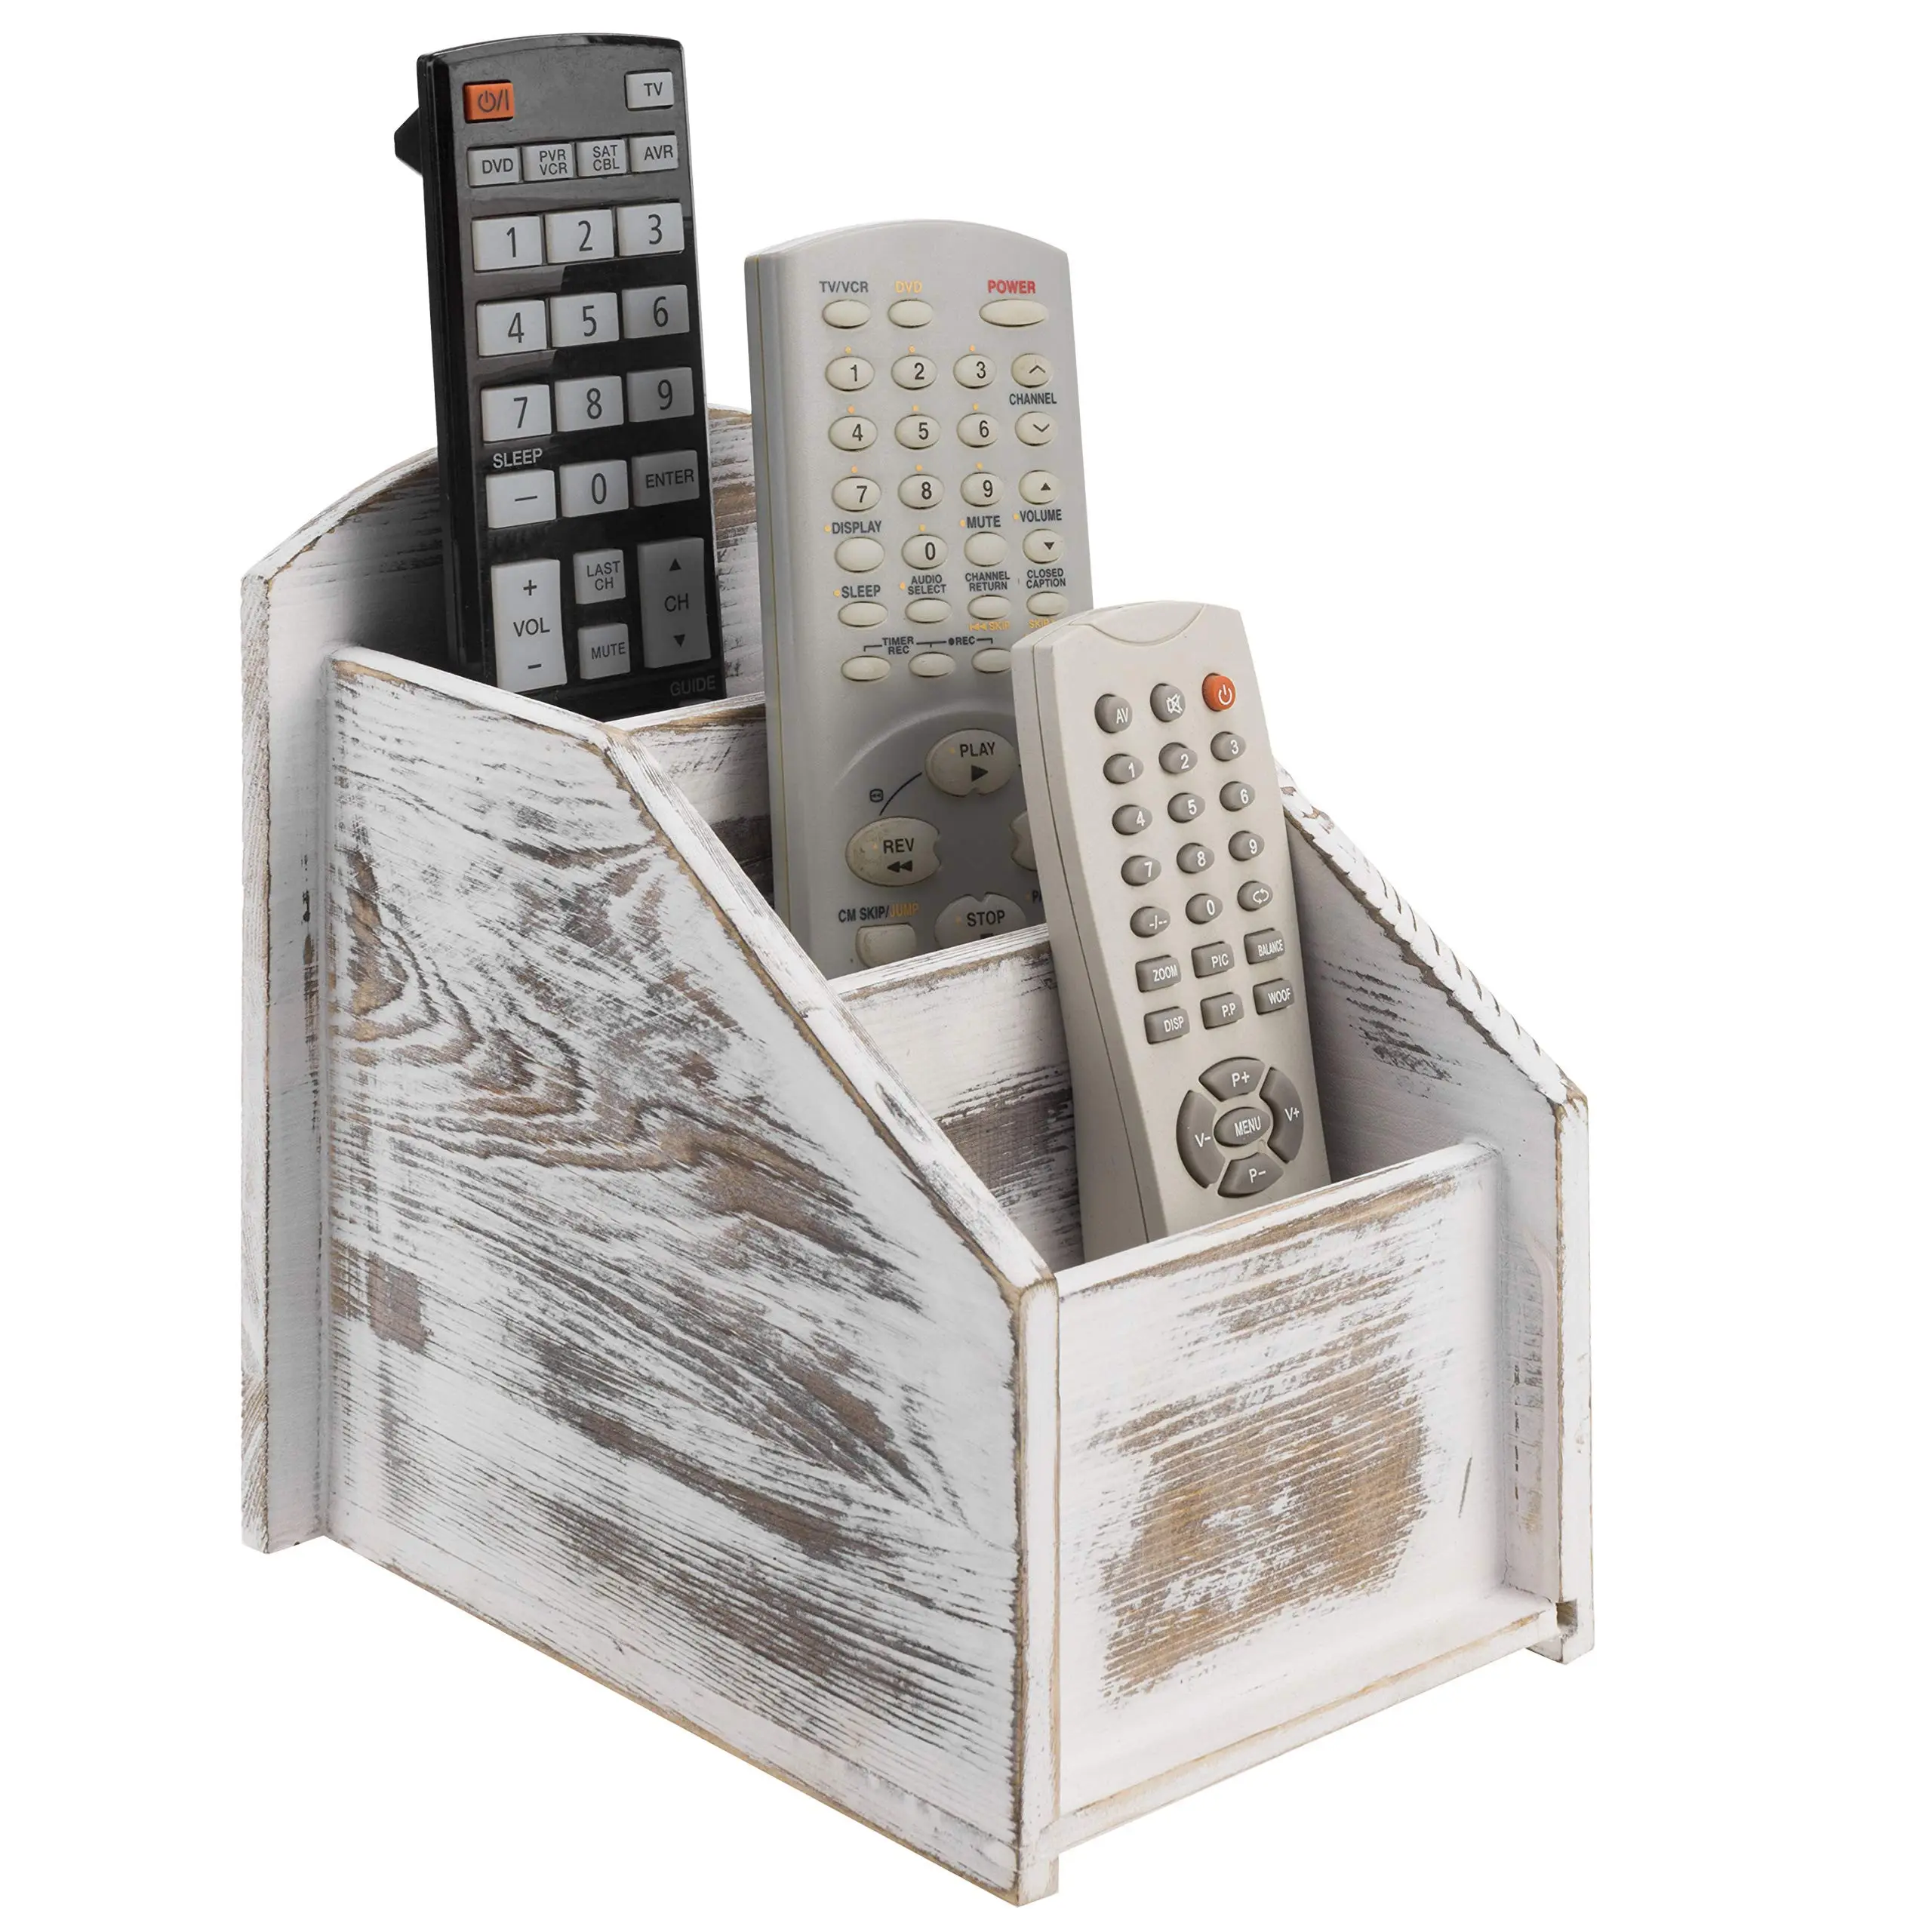 Custom Wood Remote Control Makeup Holder Wooden remote caddy box desk storage organizer TV remote control holder wooden storage